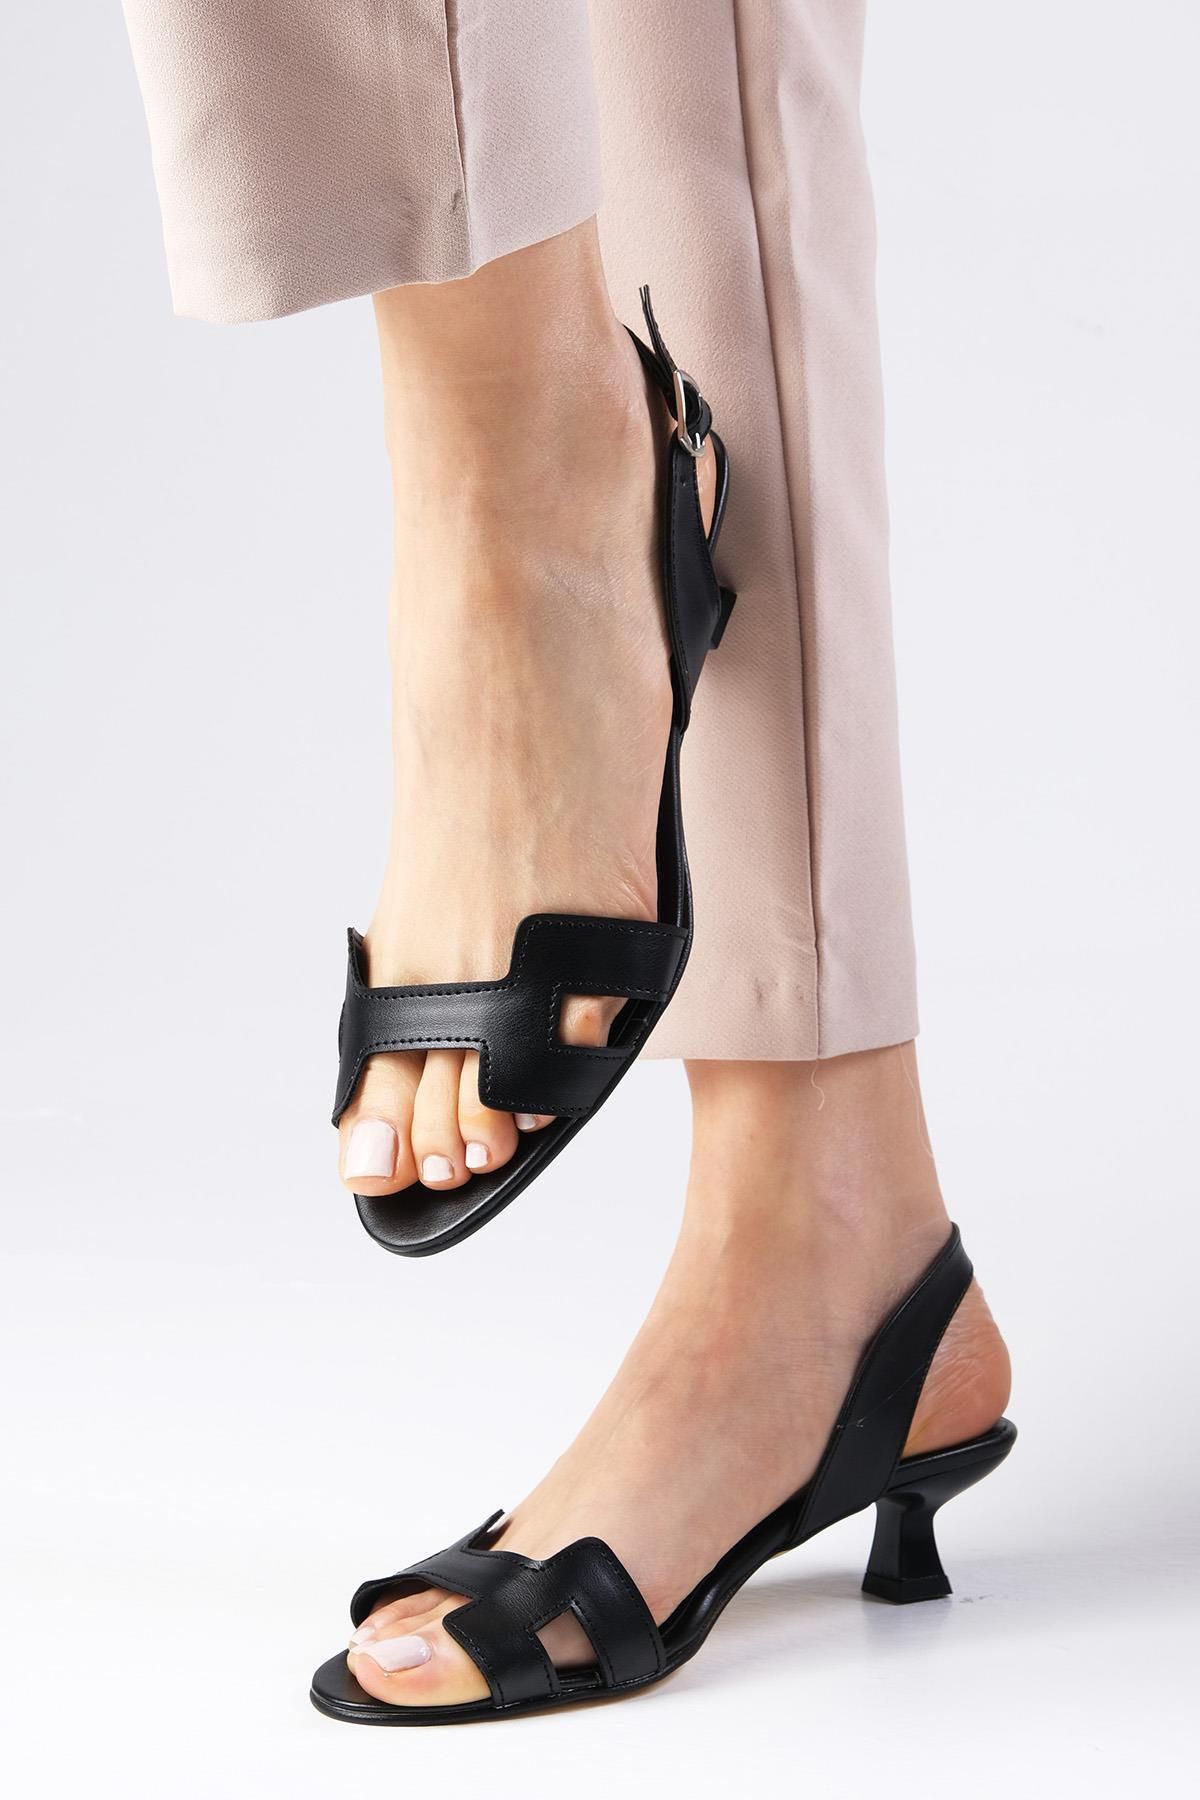 Mio Gusto Romy Siyah Renk Kadın Kısa Topuklu Ayakkabı